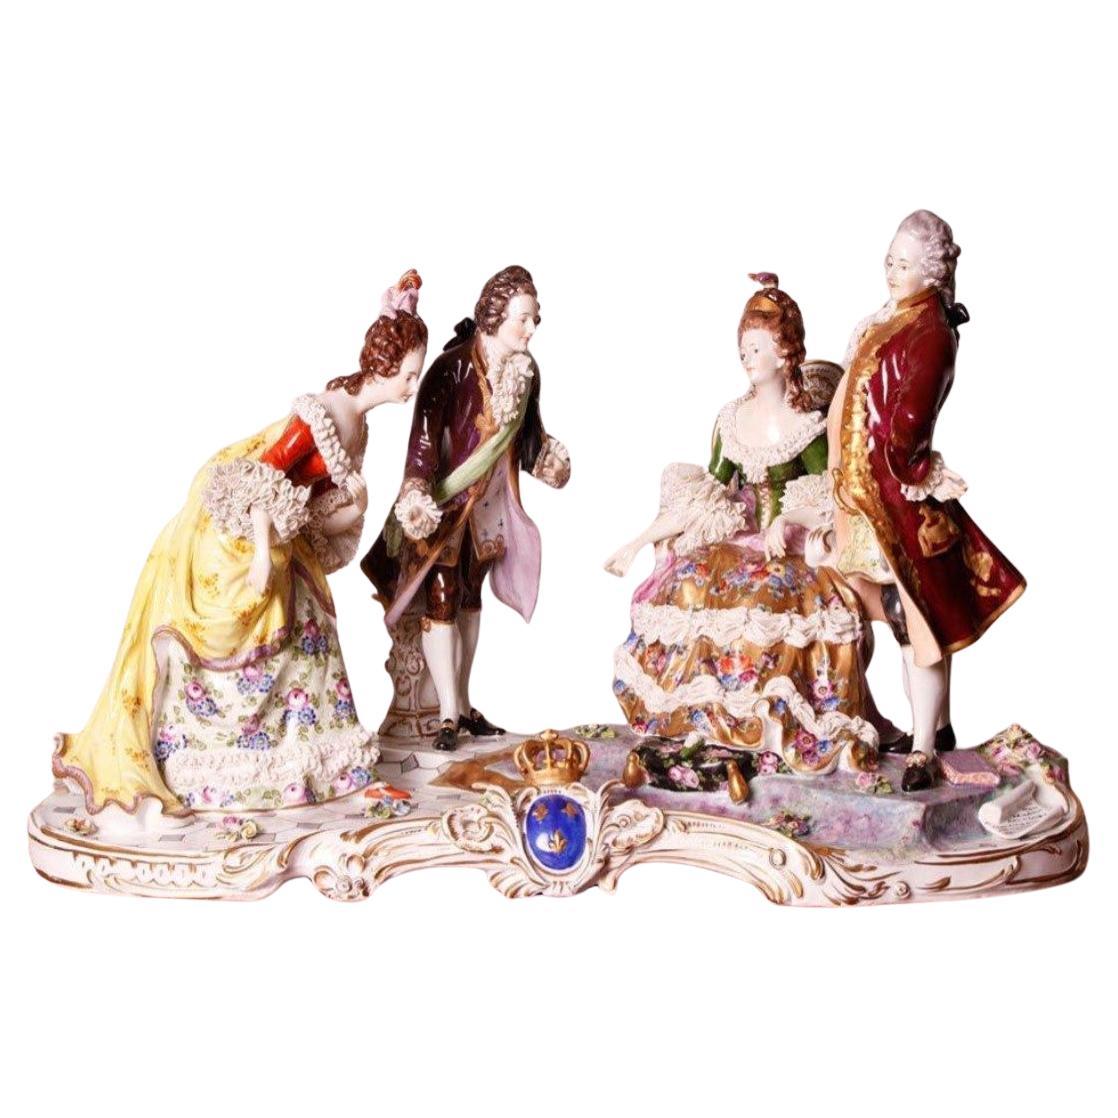 Originale figurale Dresdener Paar-Porzellangruppe in Museumsqualität des 19. Jahrhunderts im Angebot